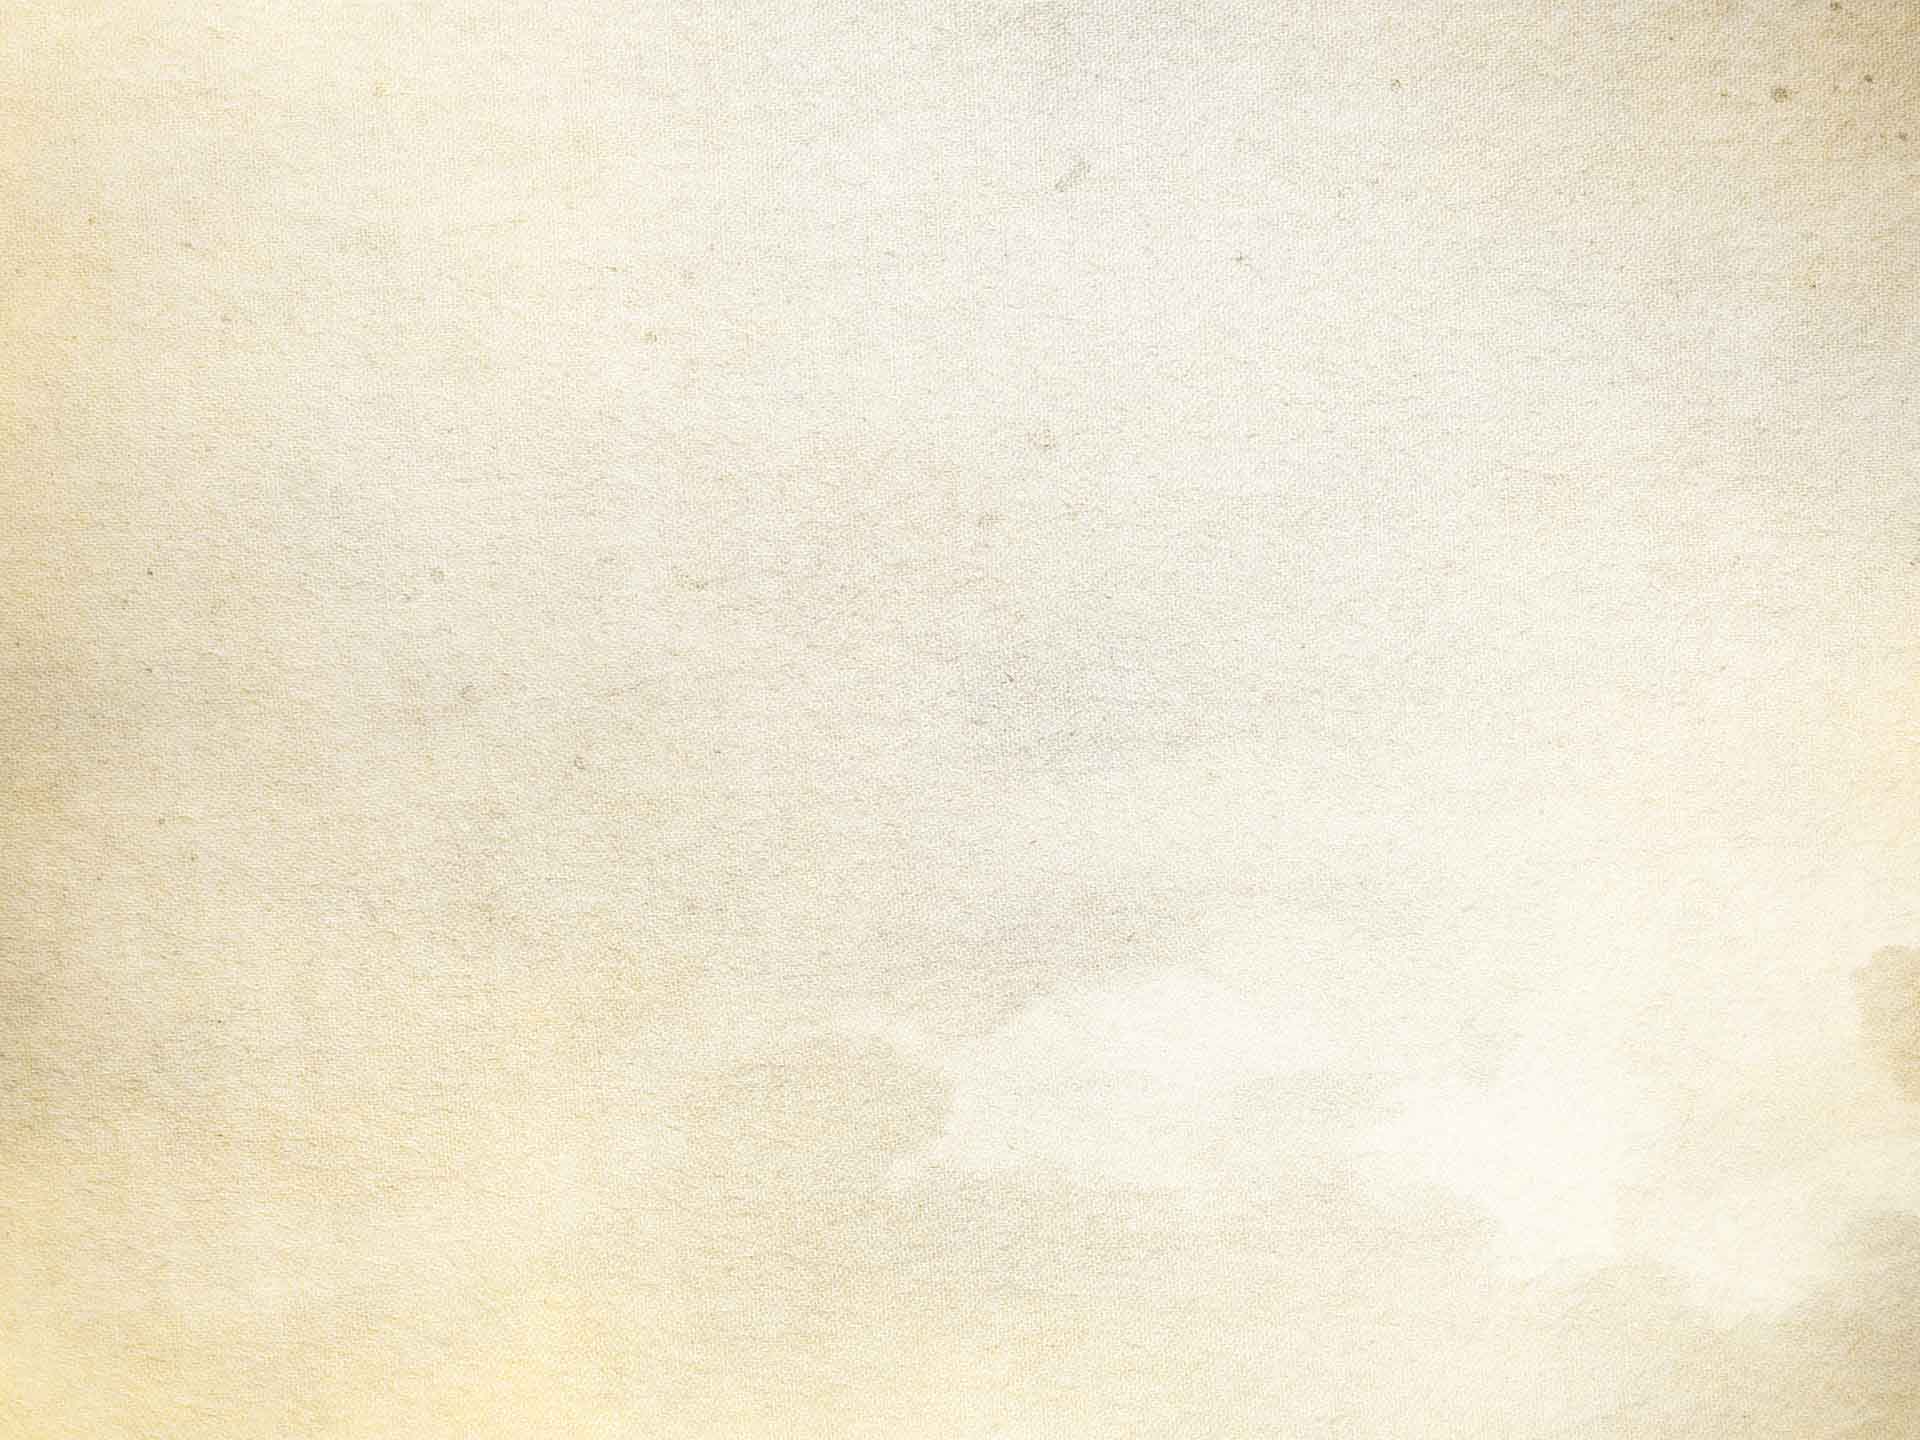 44756311 - old parchment paper texture background, beige paper ...